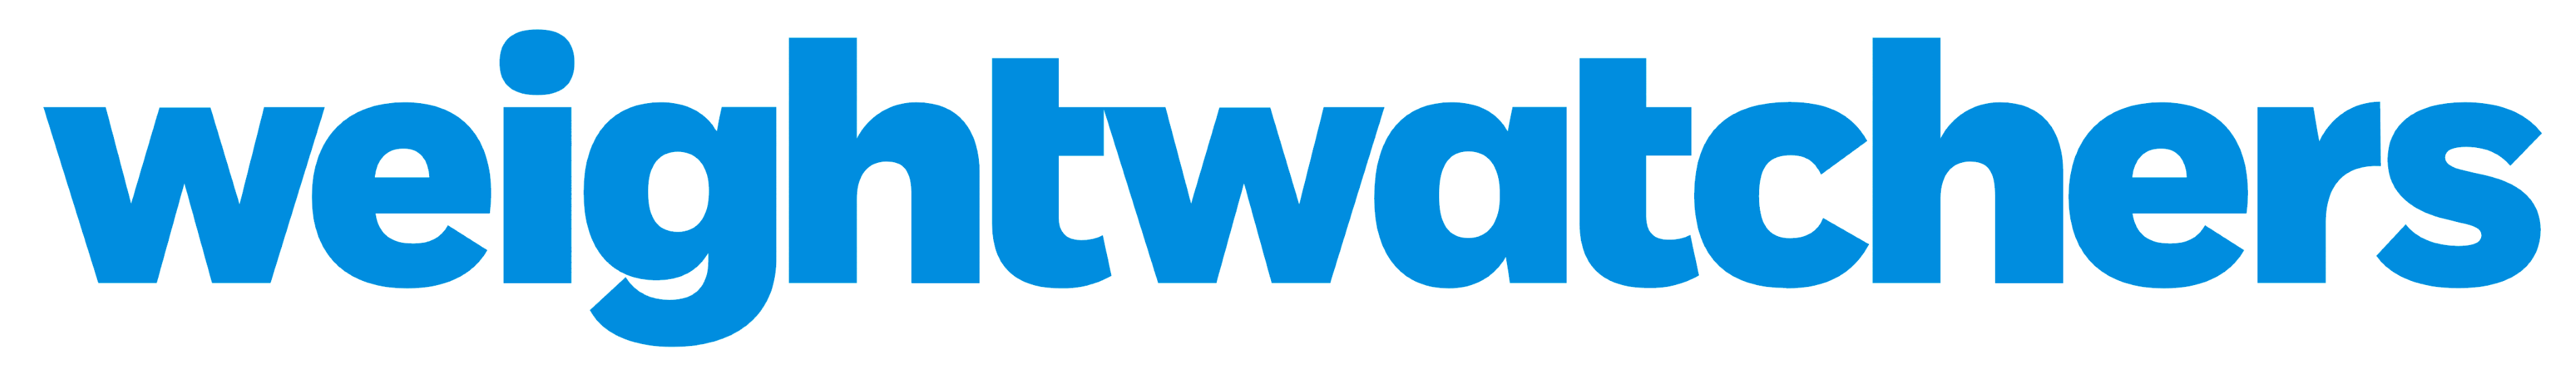 Weight Watchers logo, logotype